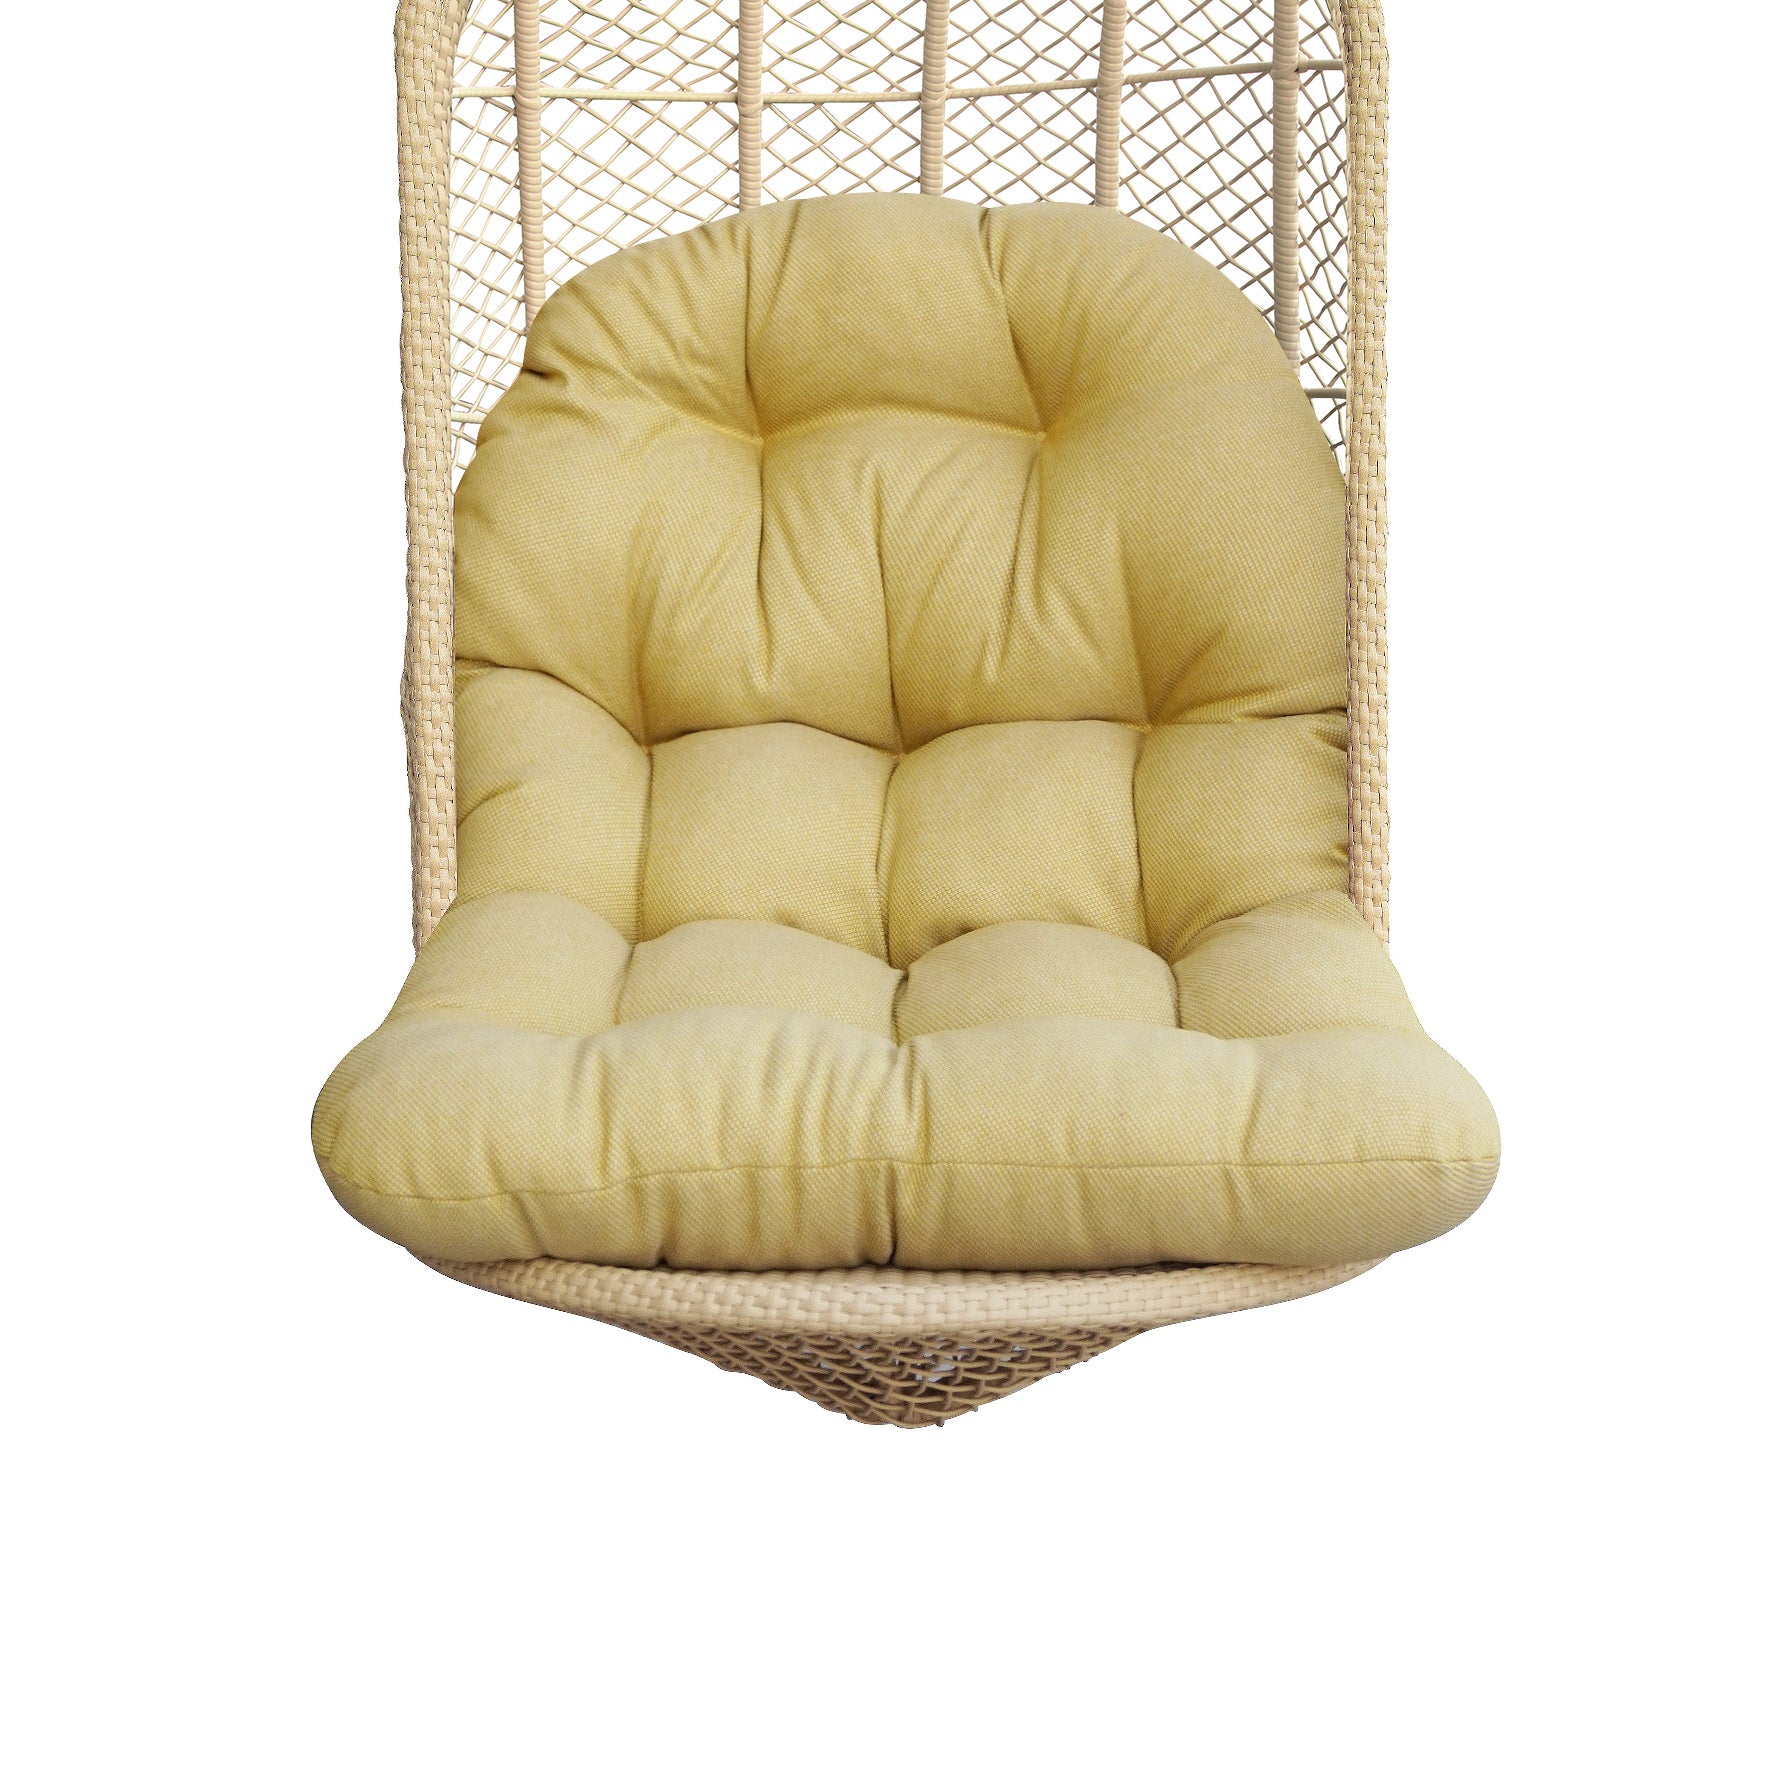 Patio Balcony Hanging Basket Chair Cushions Egg Chair Swing Chair Pads (Olefin Mixed Yellow/Grey)